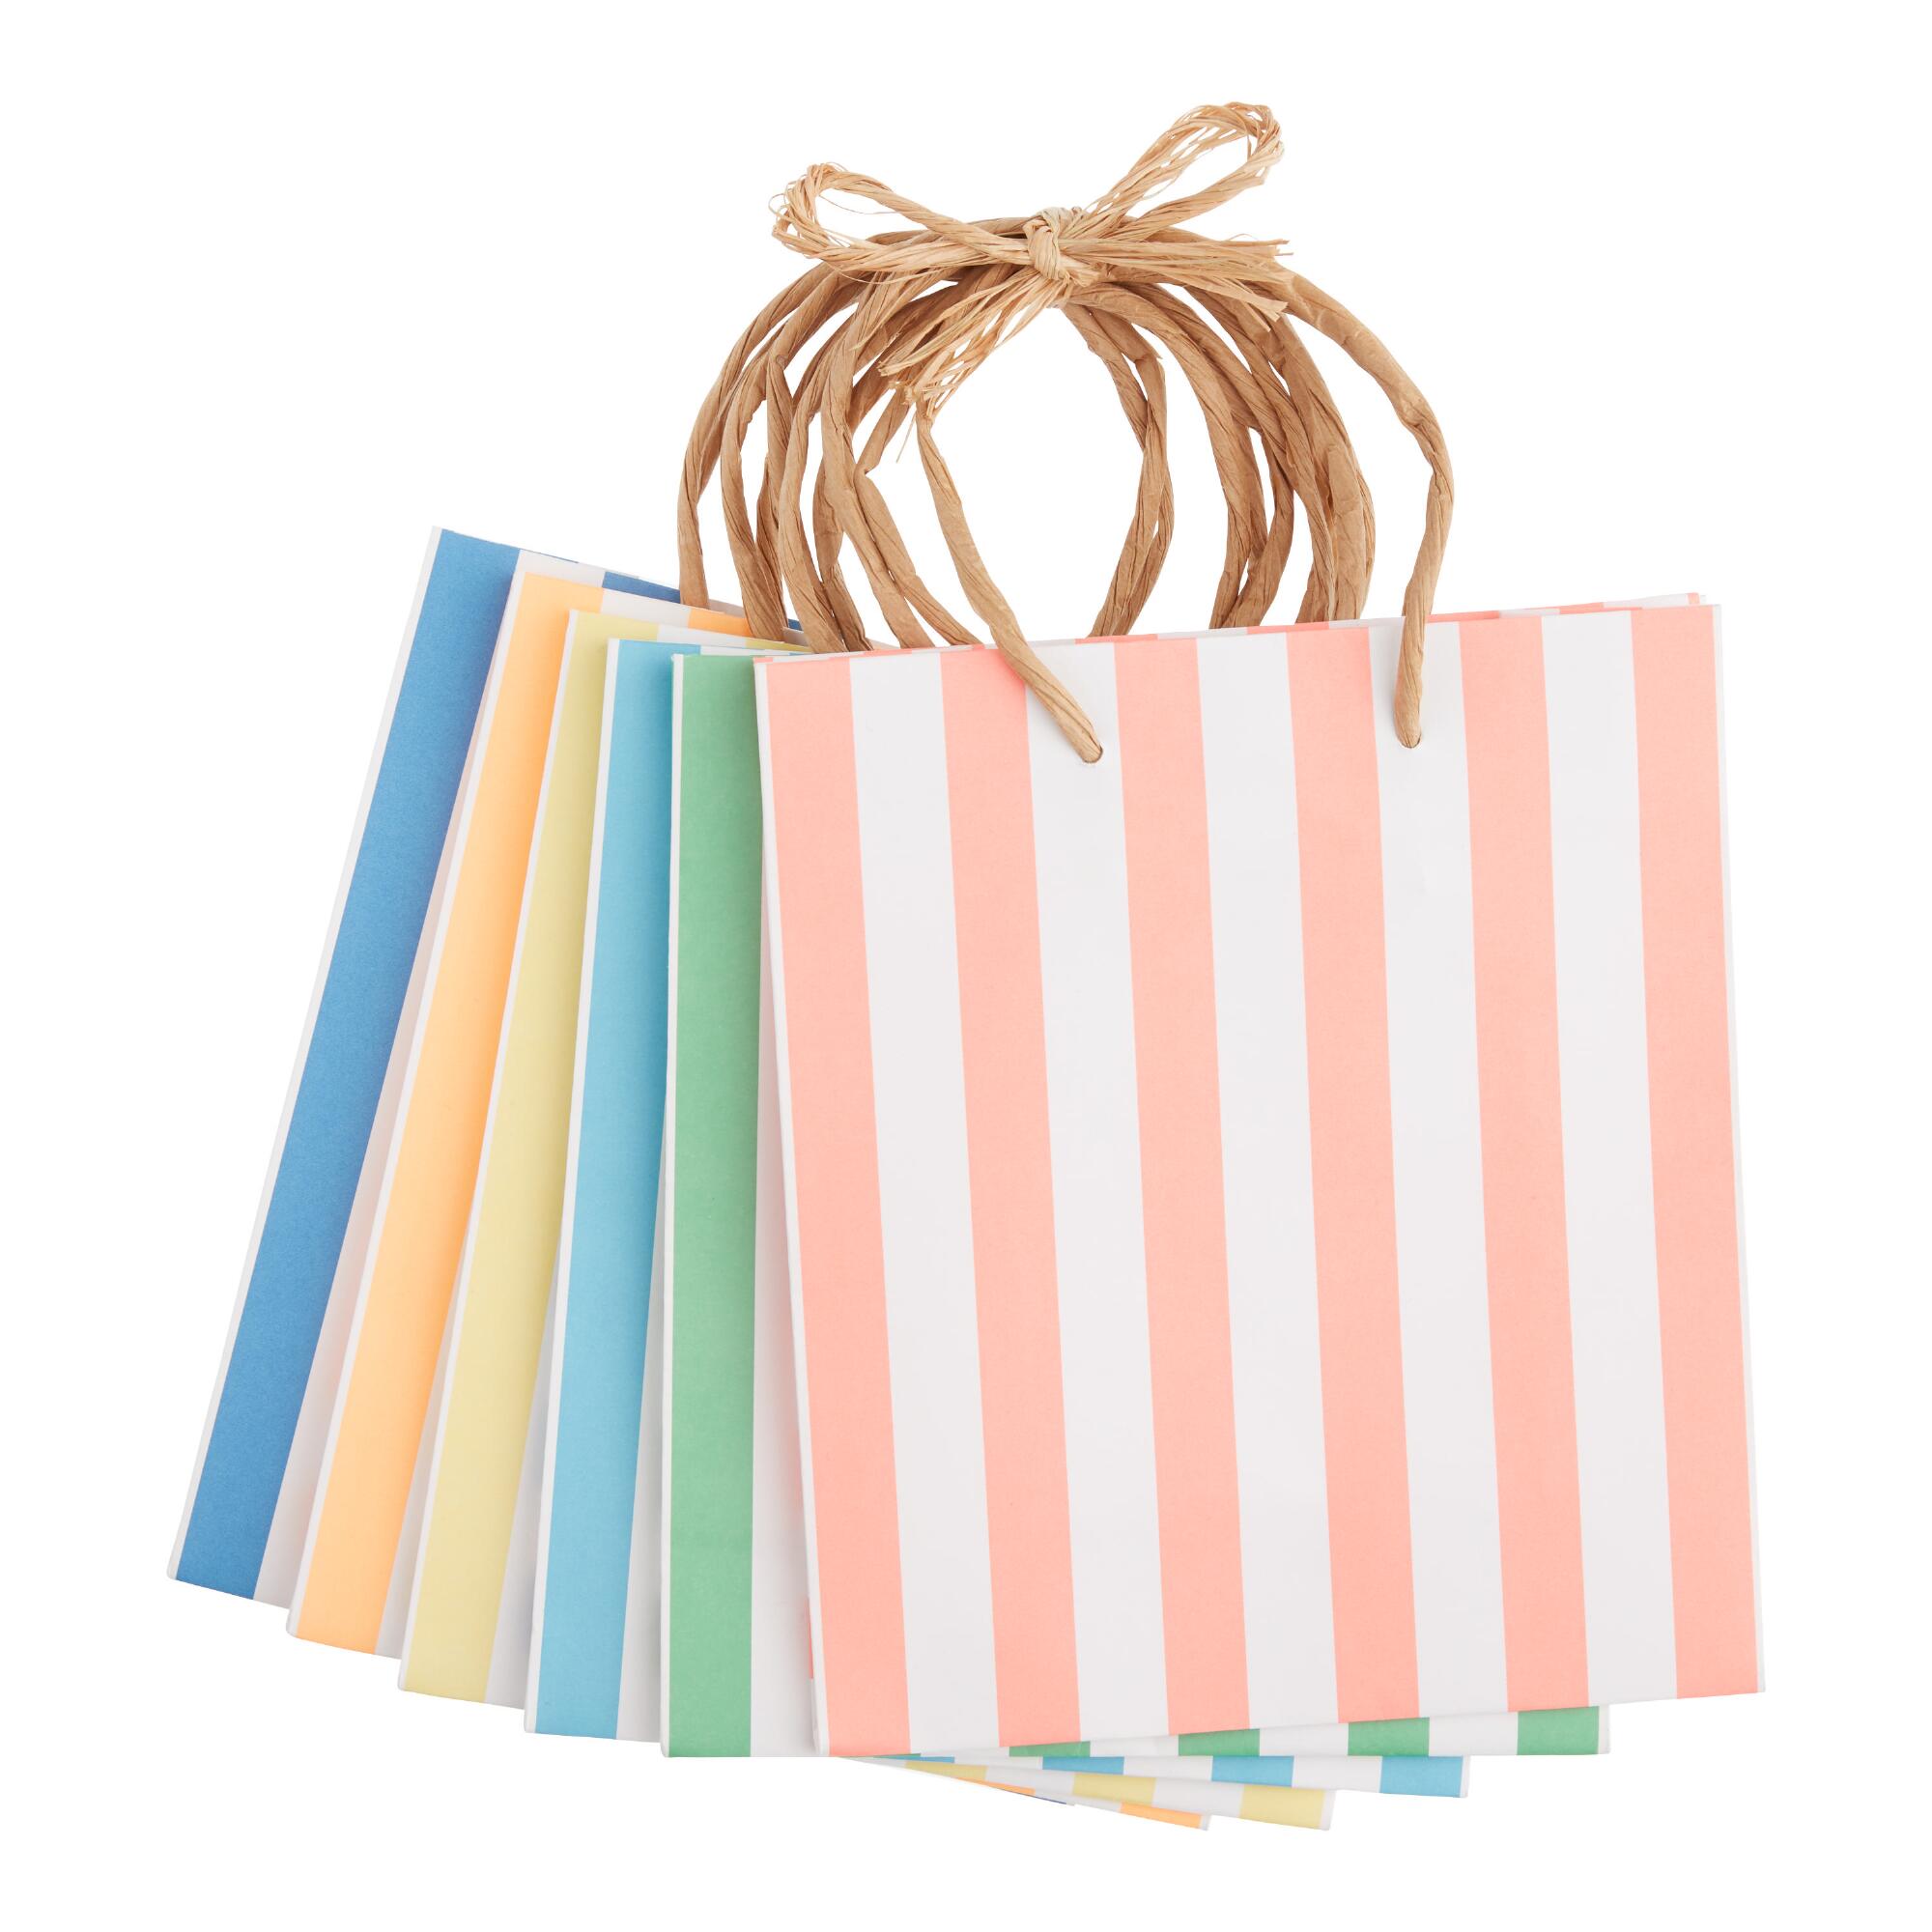 Small Meri Meri Striped Gift Bags 6 Pack by World Market